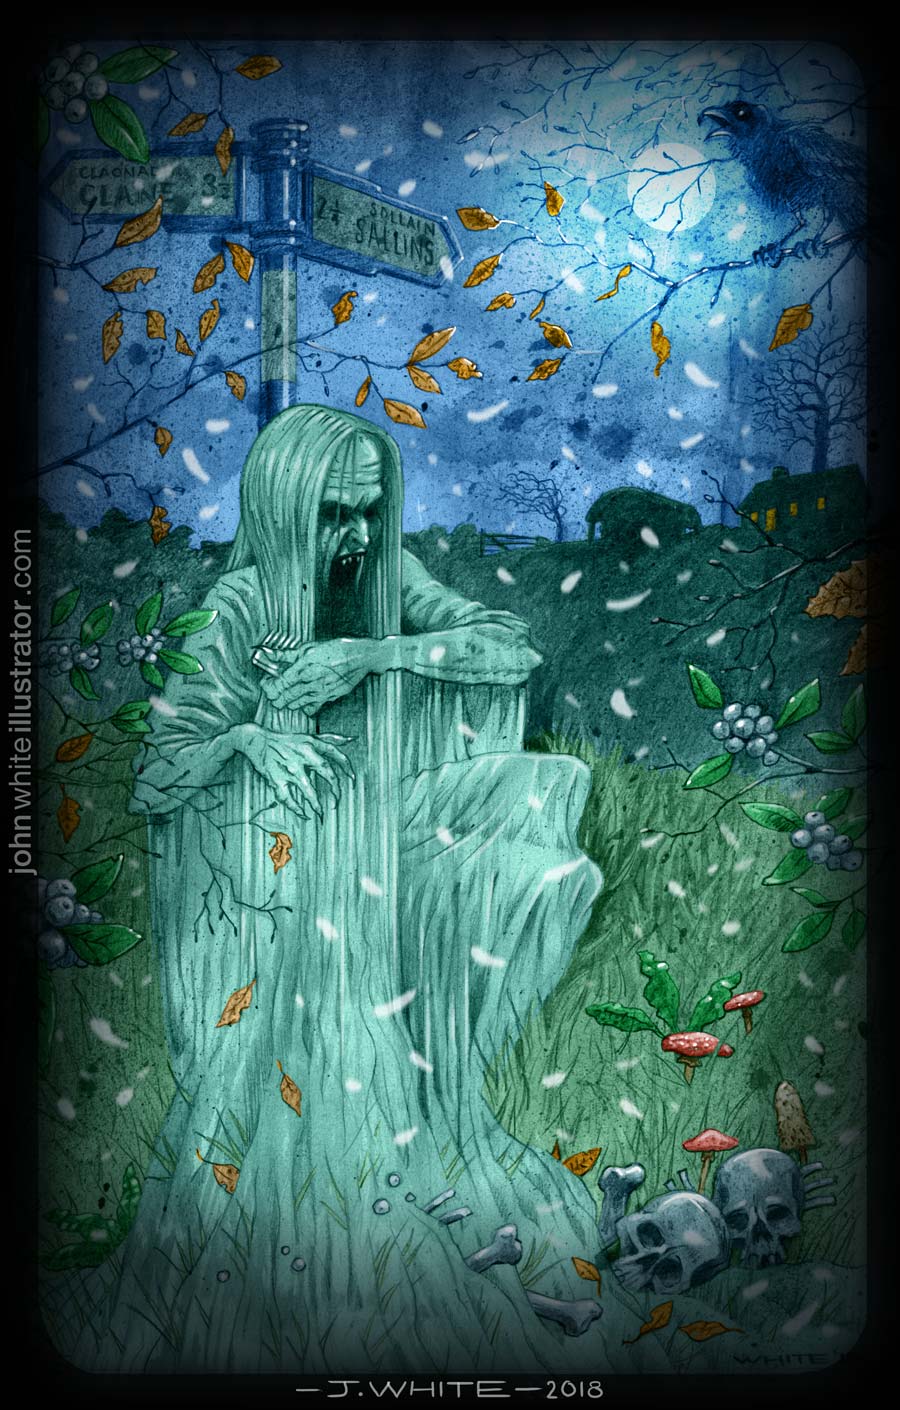 scary horror colour book illustration of irish banshee